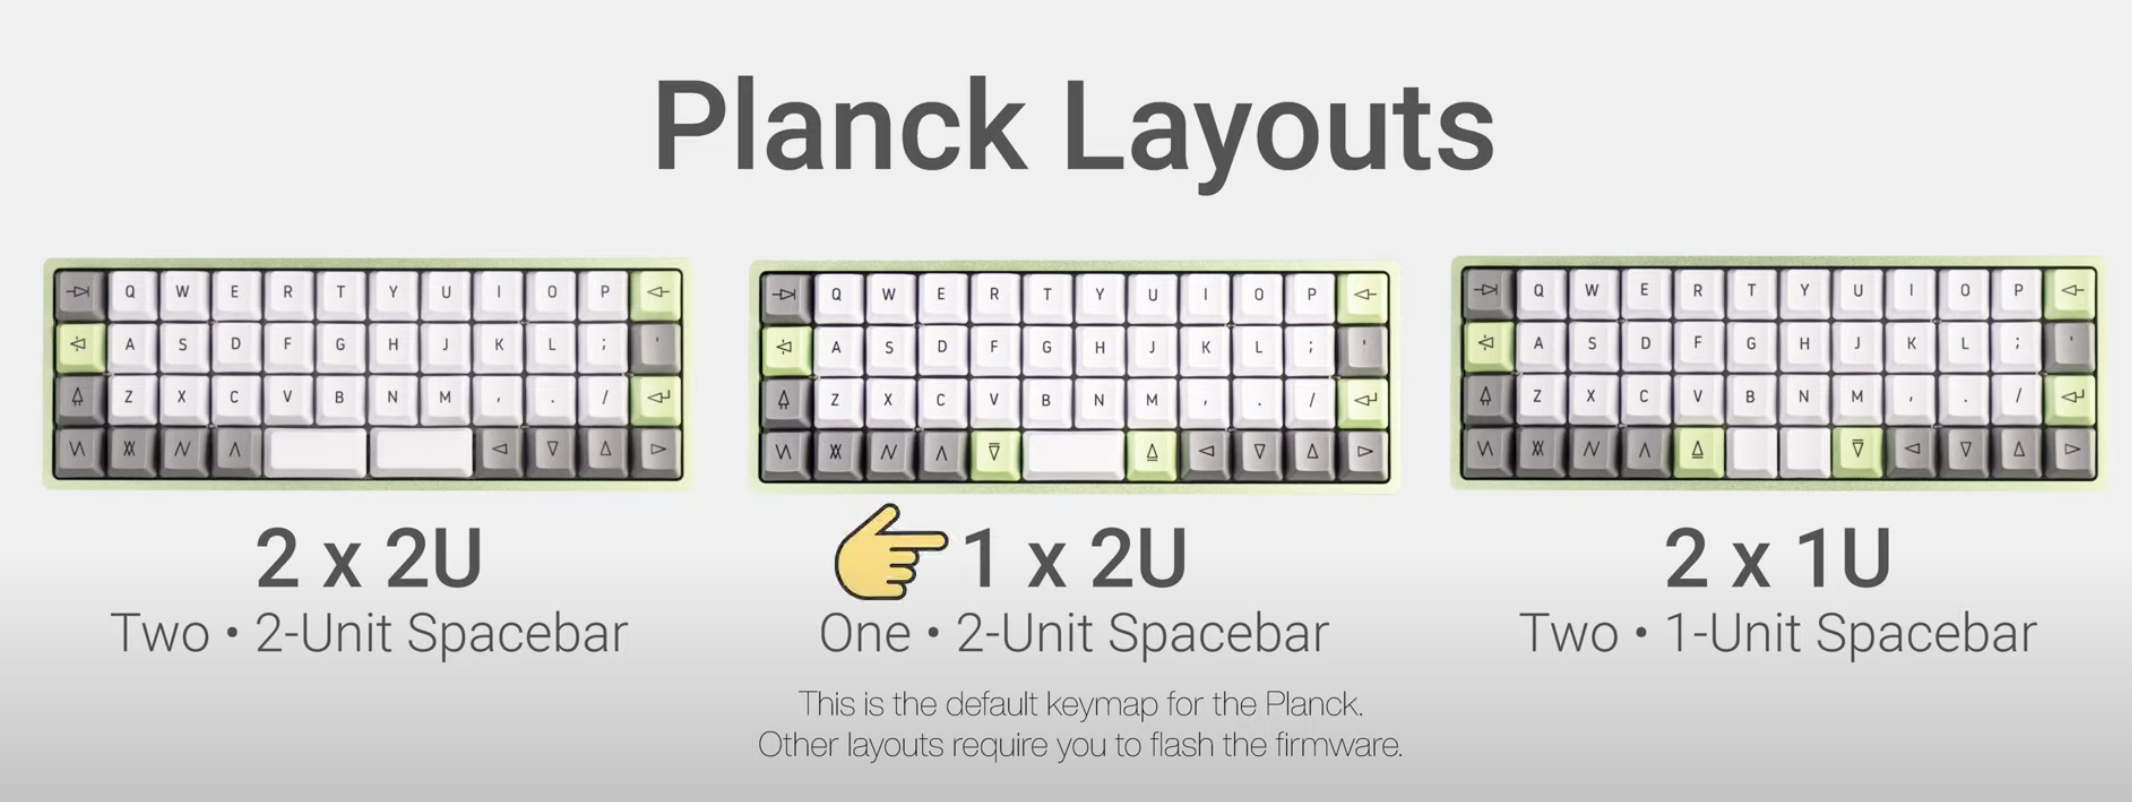 plank-3-layouts